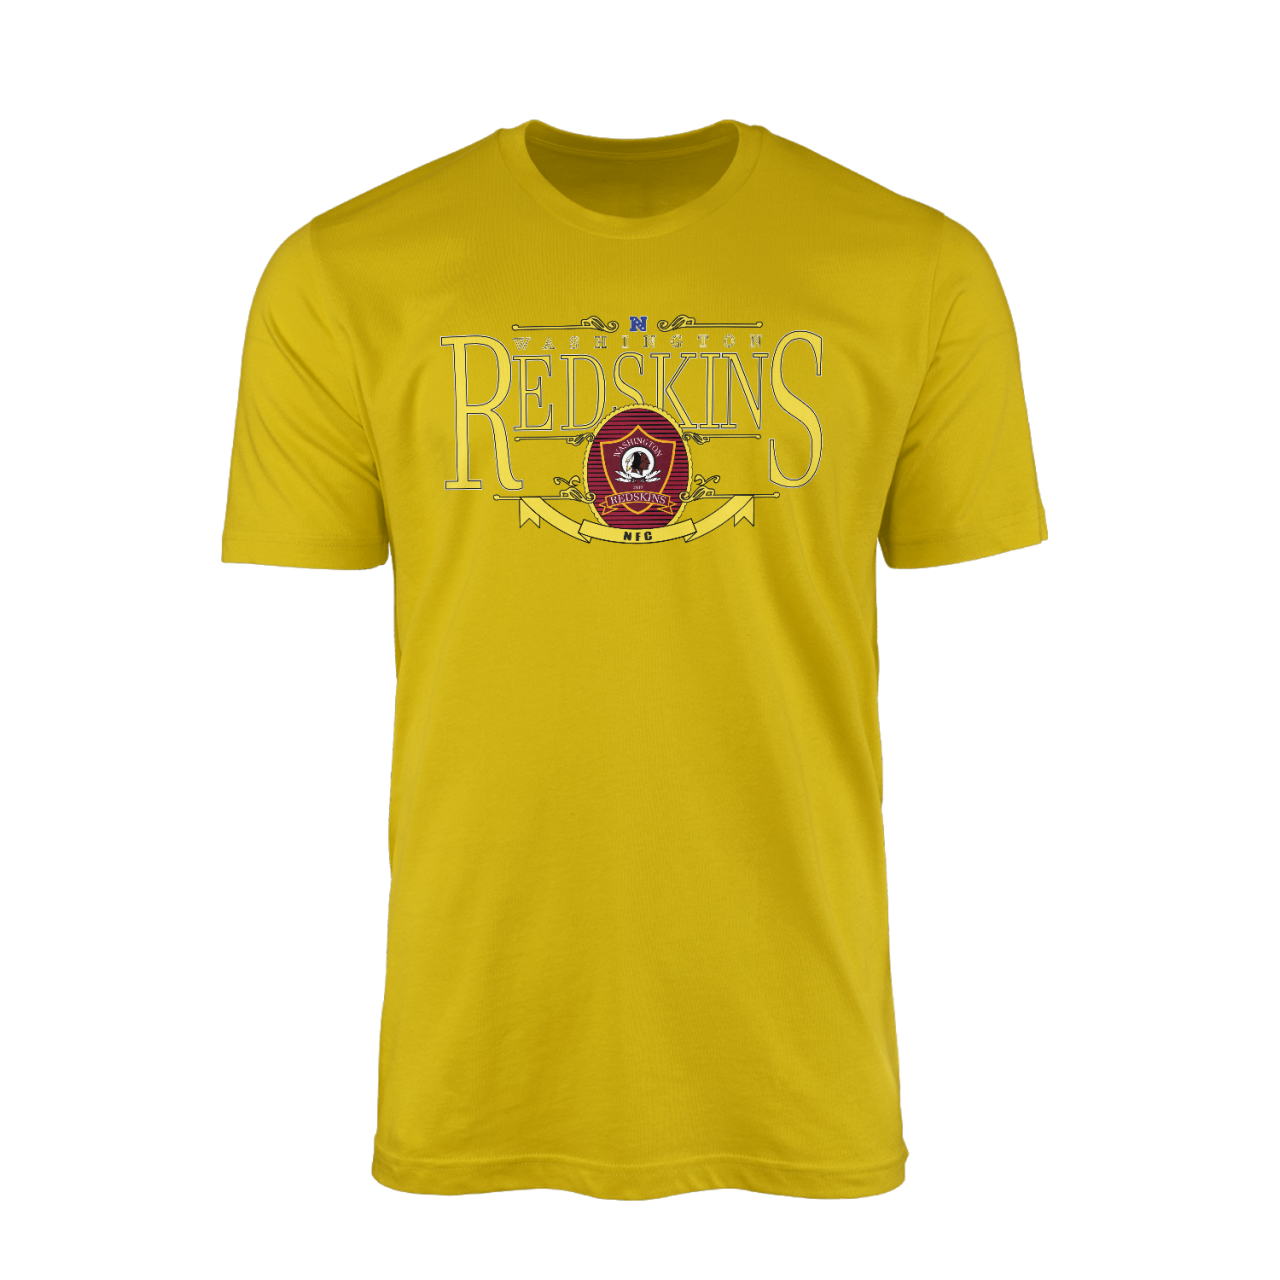 Redskins Retro Design Sarı Tshirt